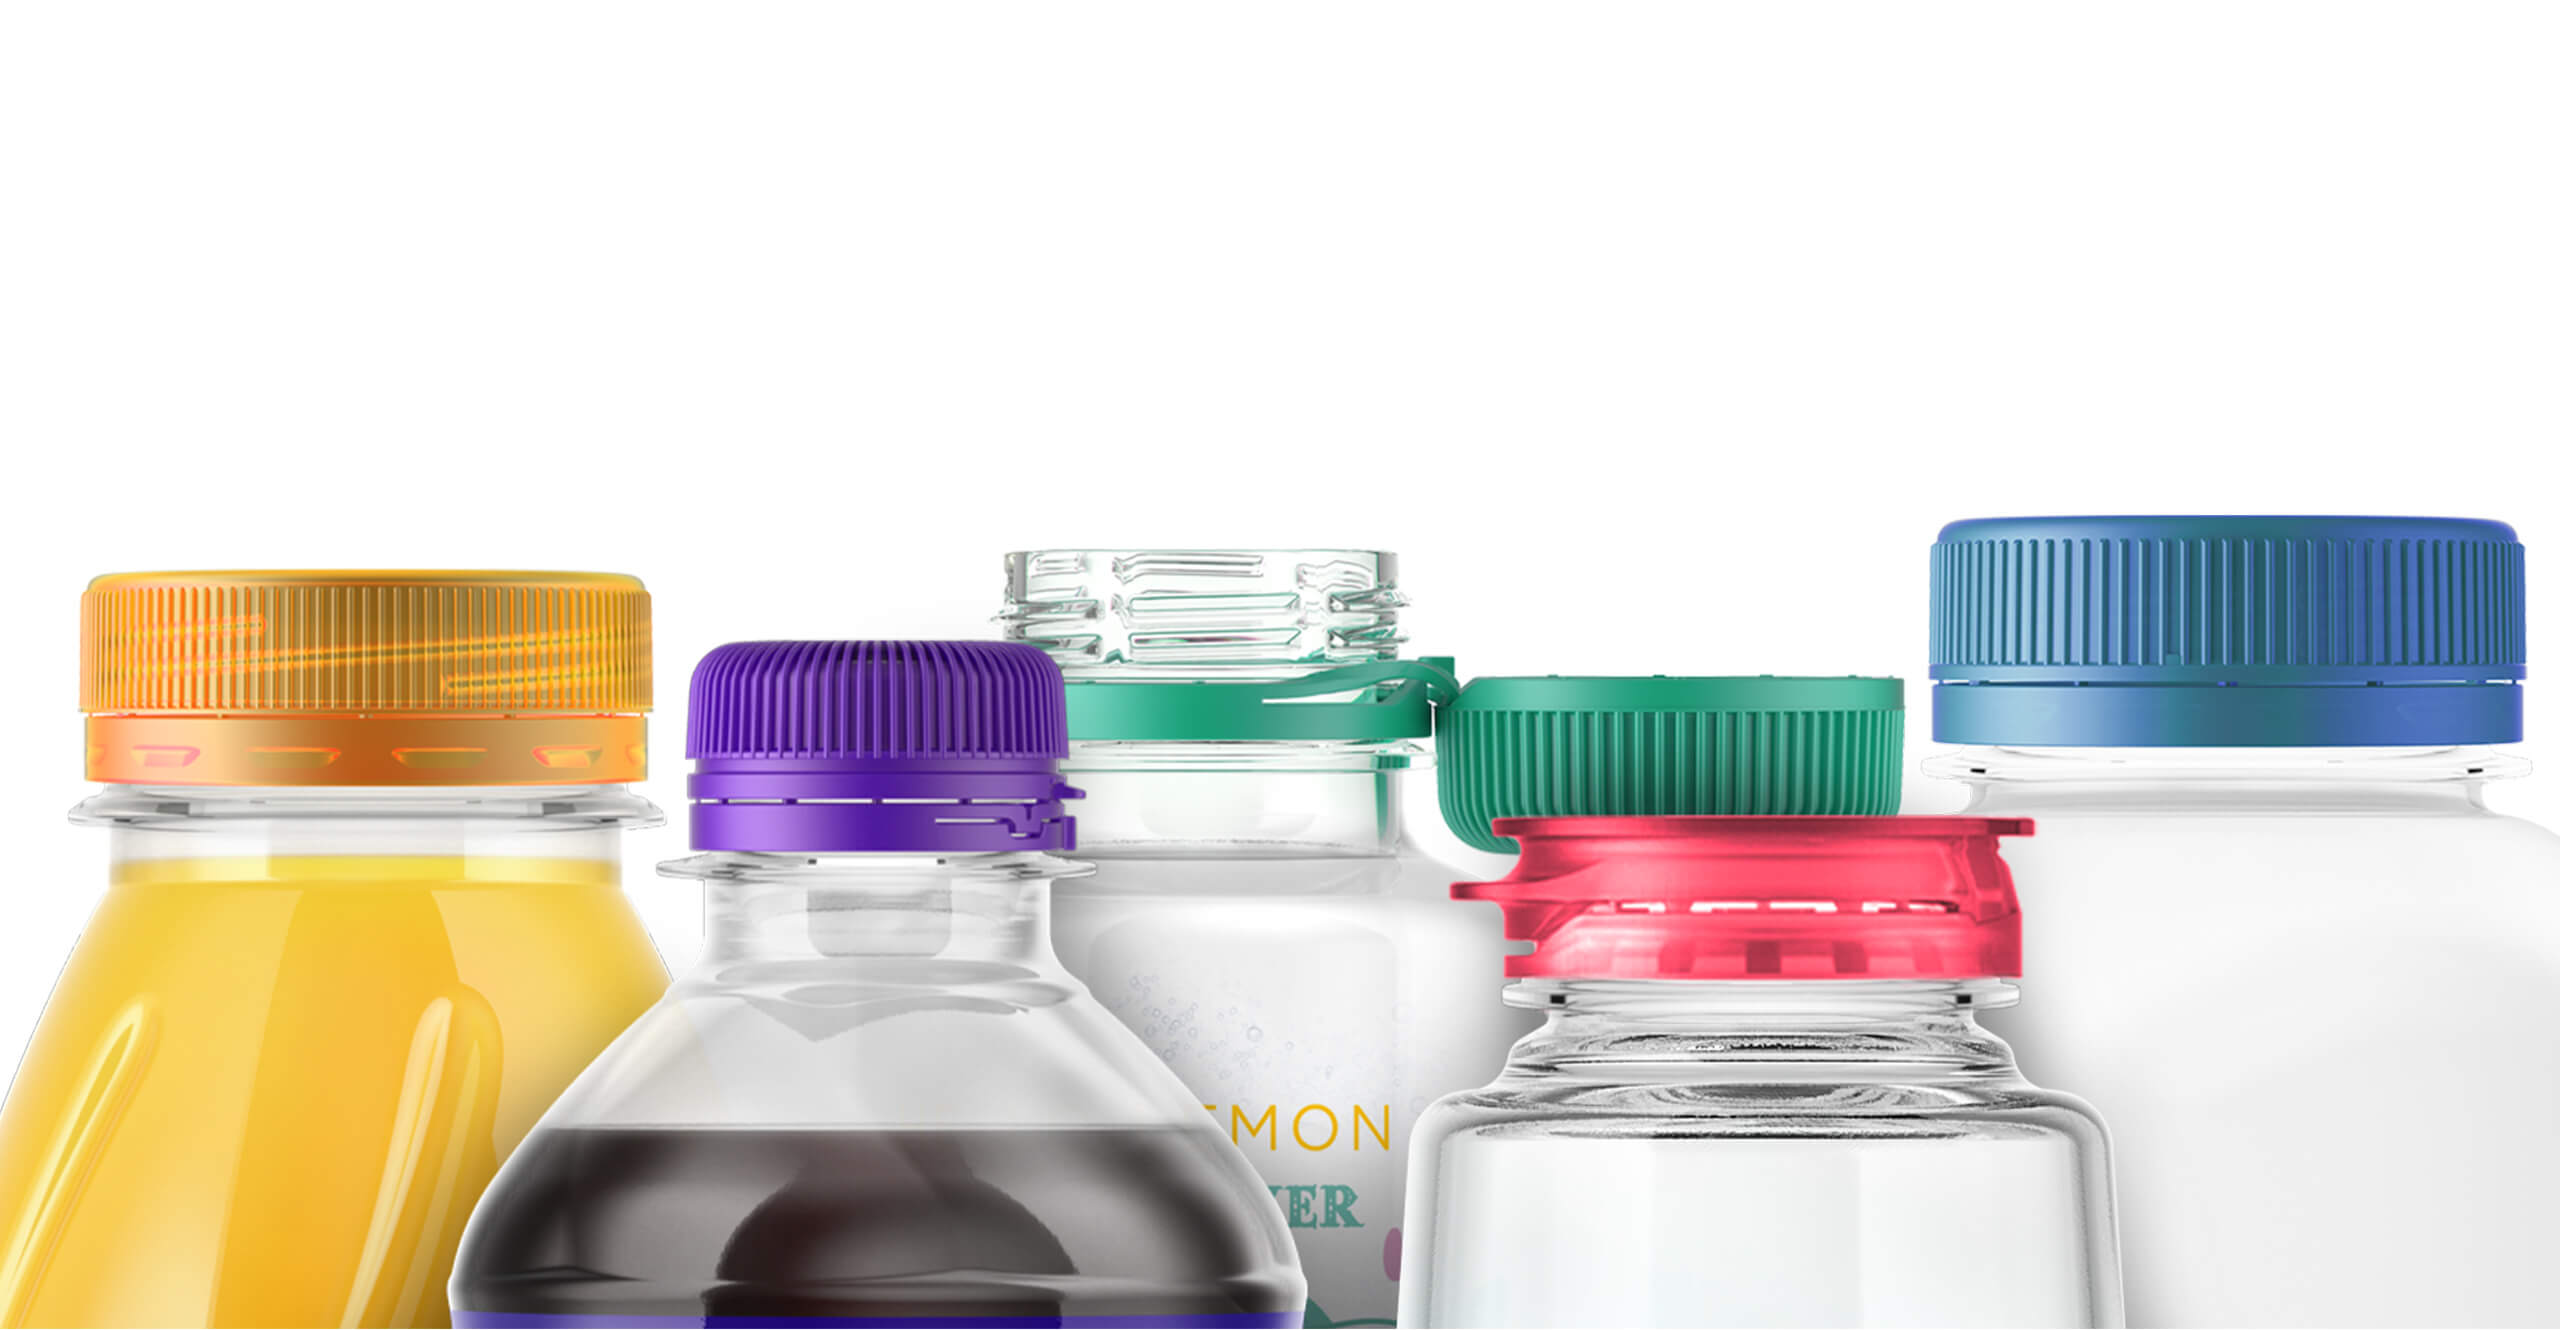 Miscellaneous beverage packaging using EcoBase preform design